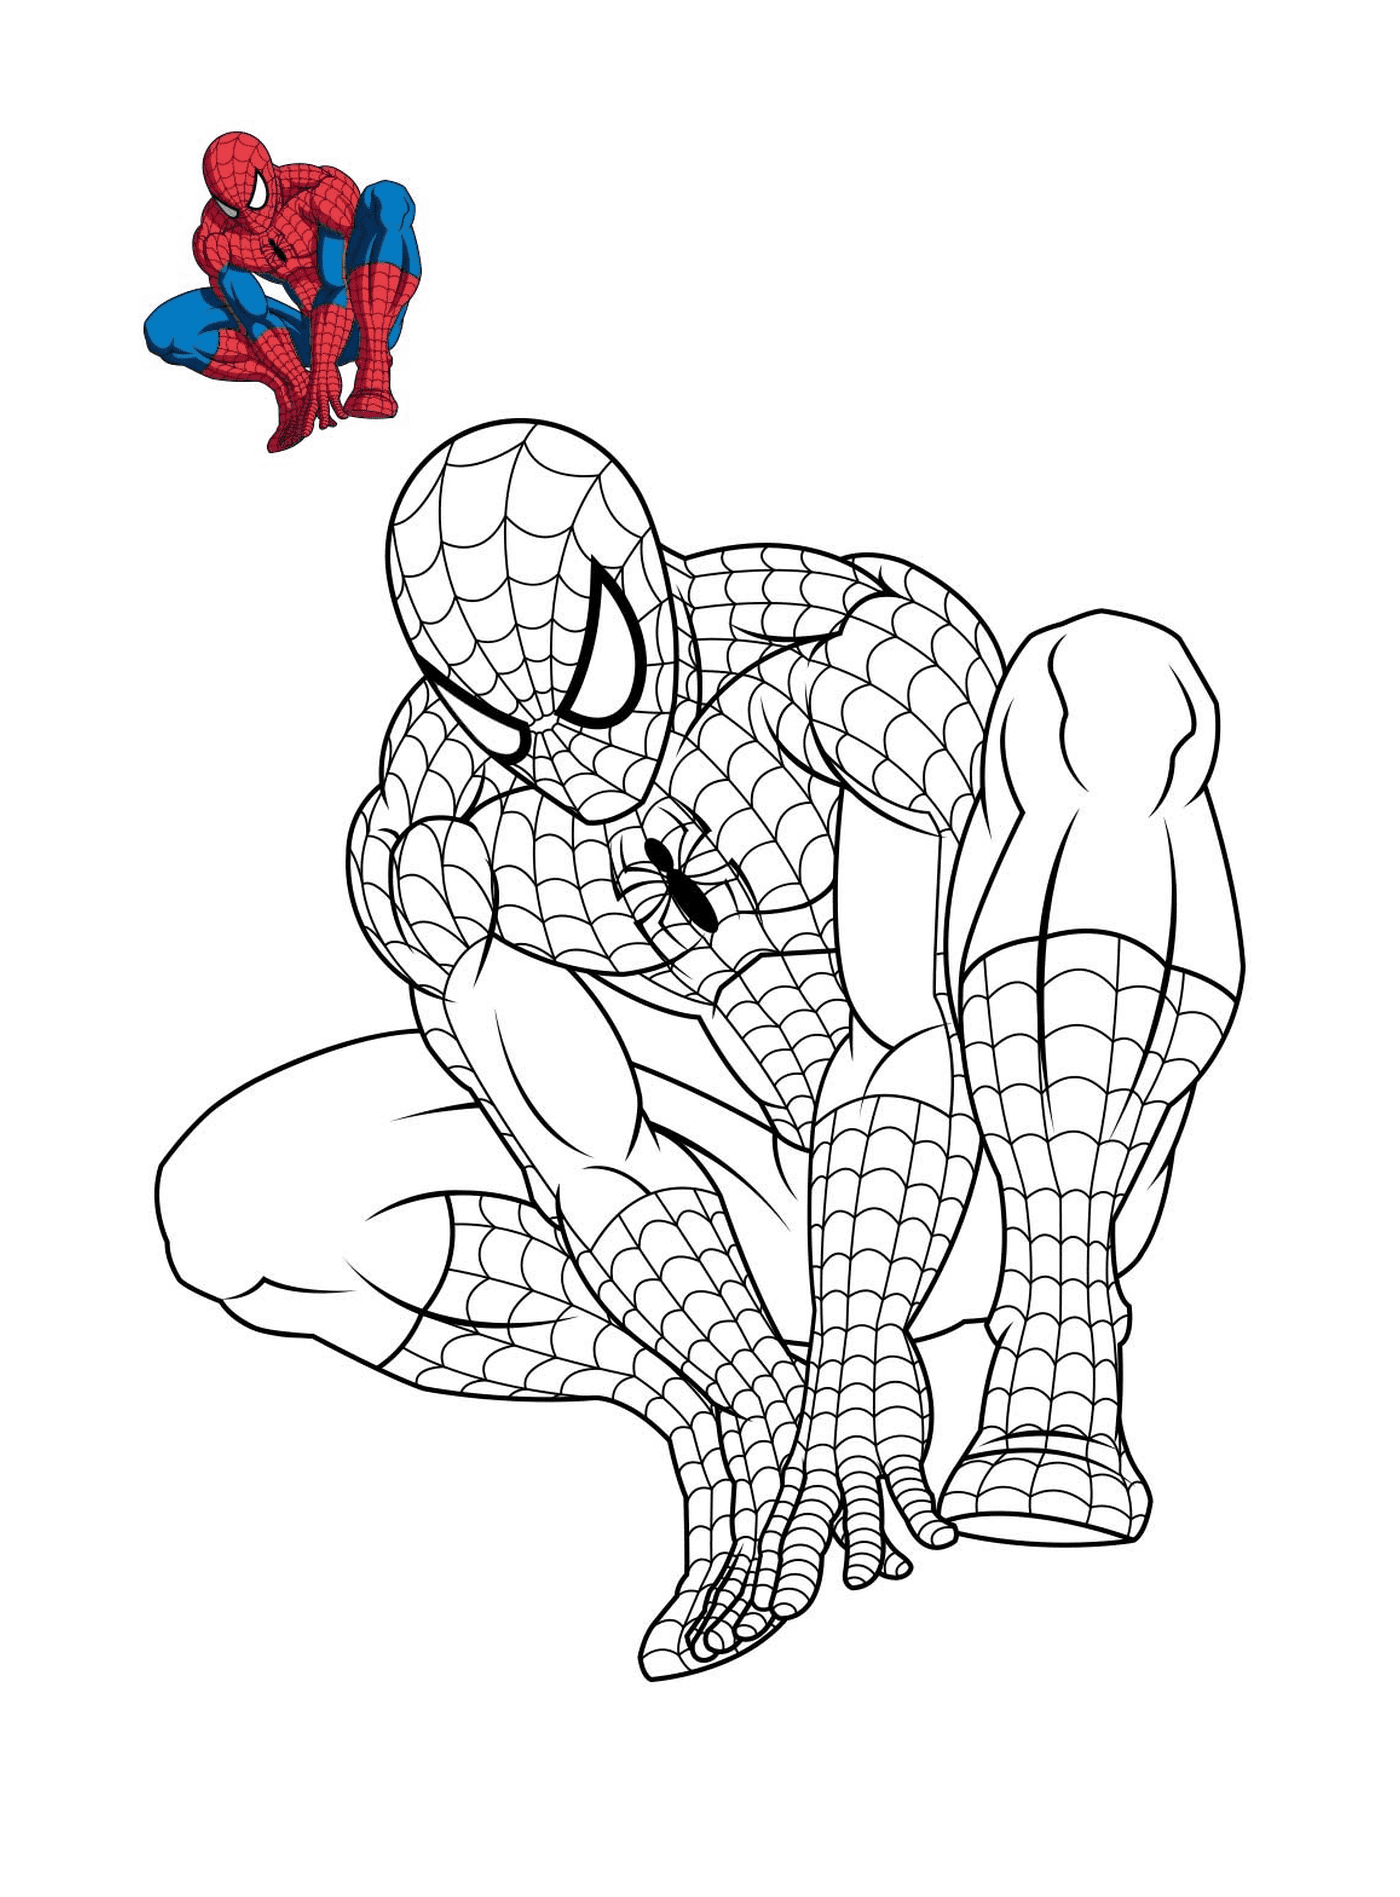  Spider-Man in reflection 